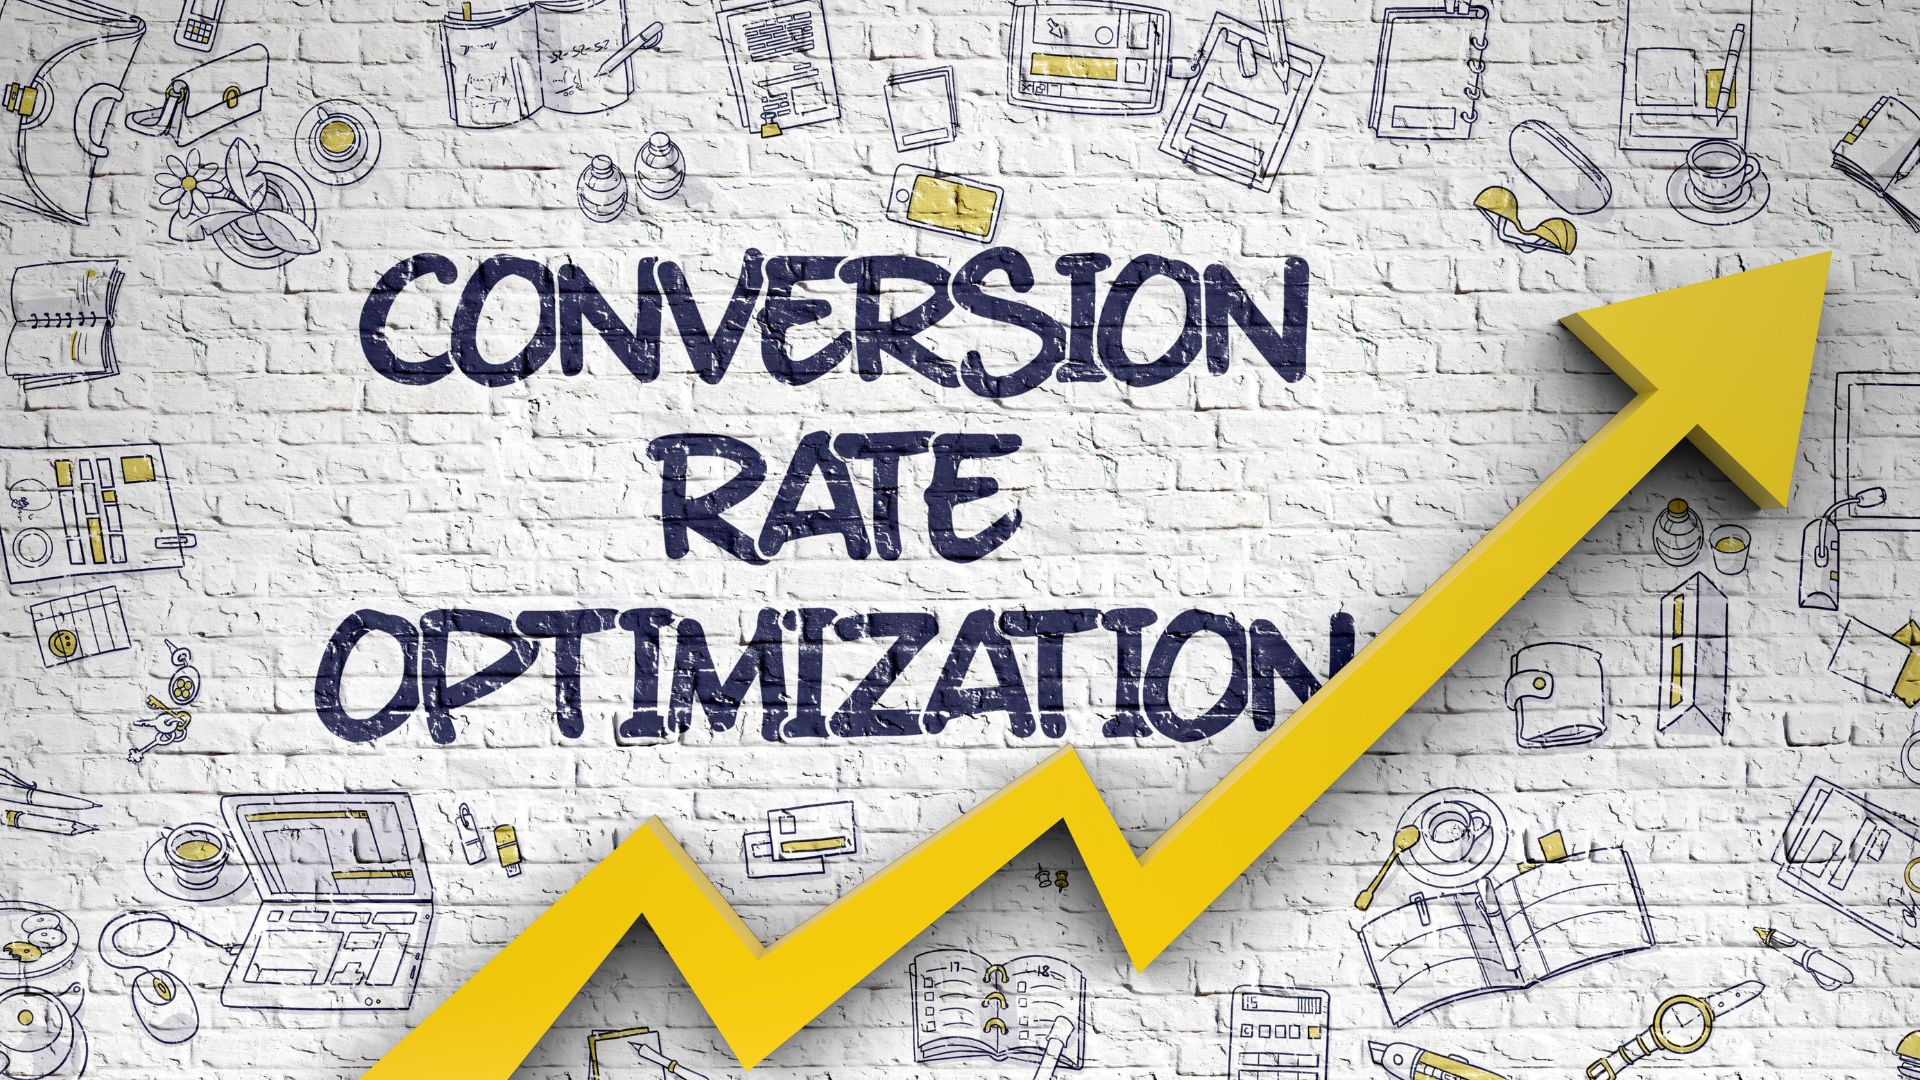 ecommerce conversion rate optimization